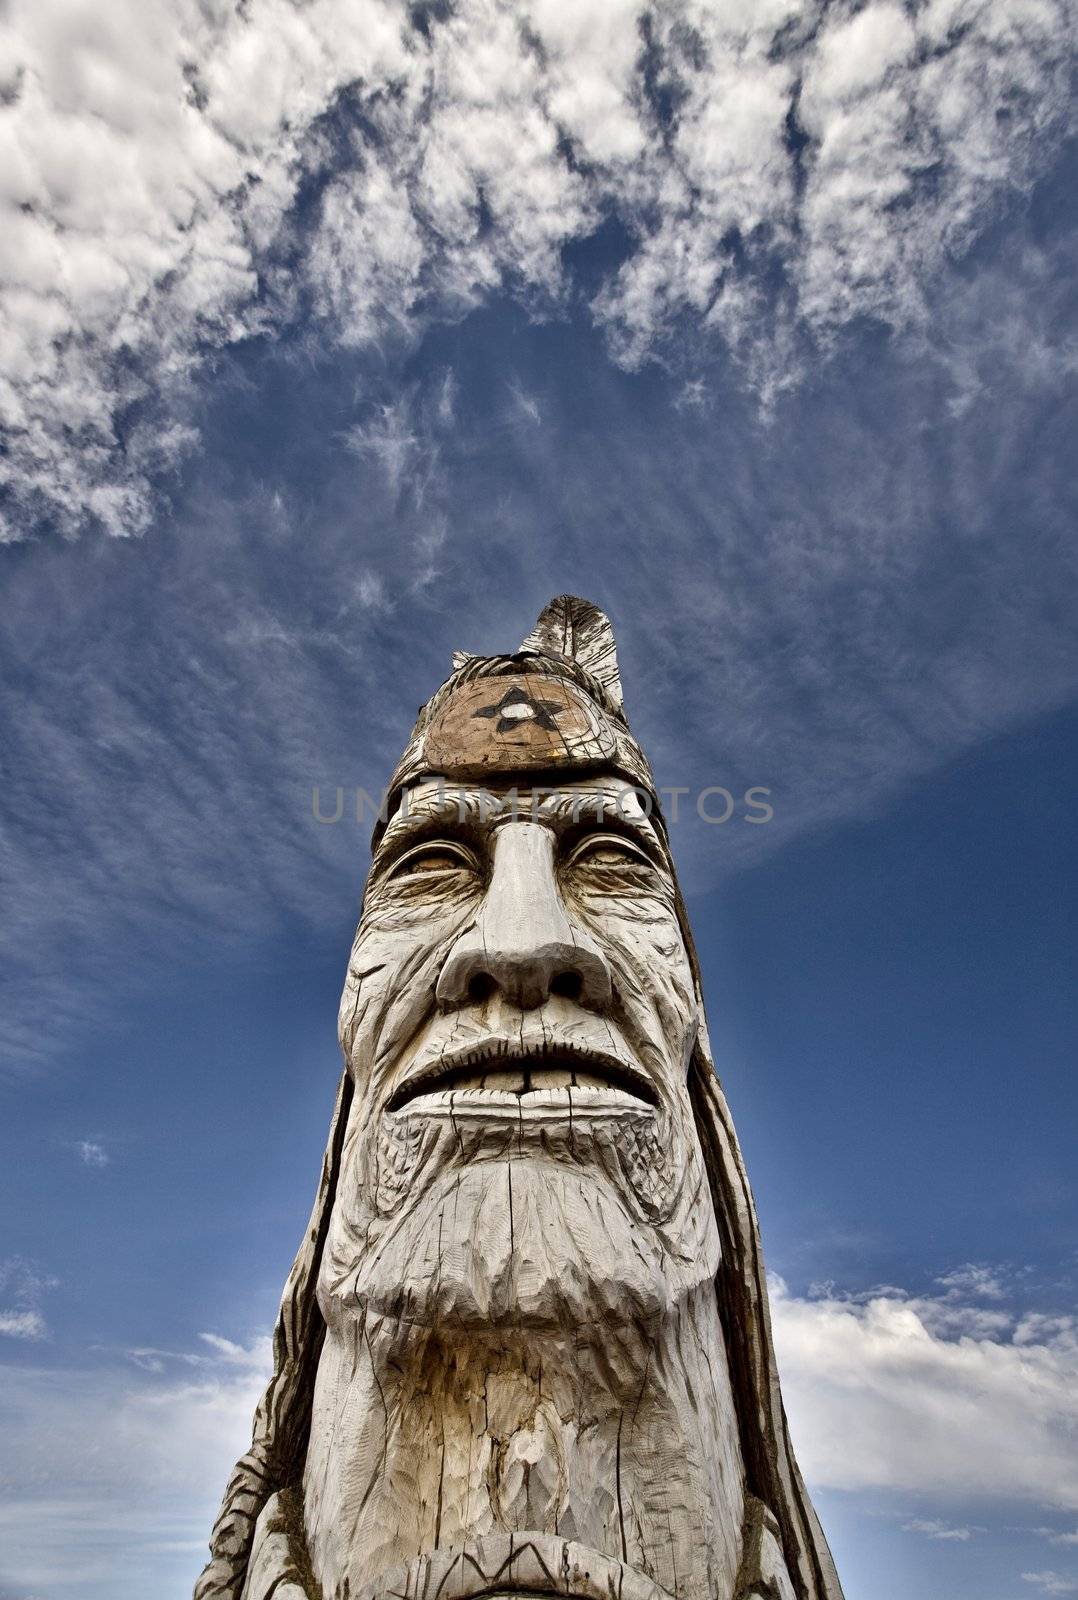 Totem Pole by pictureguy